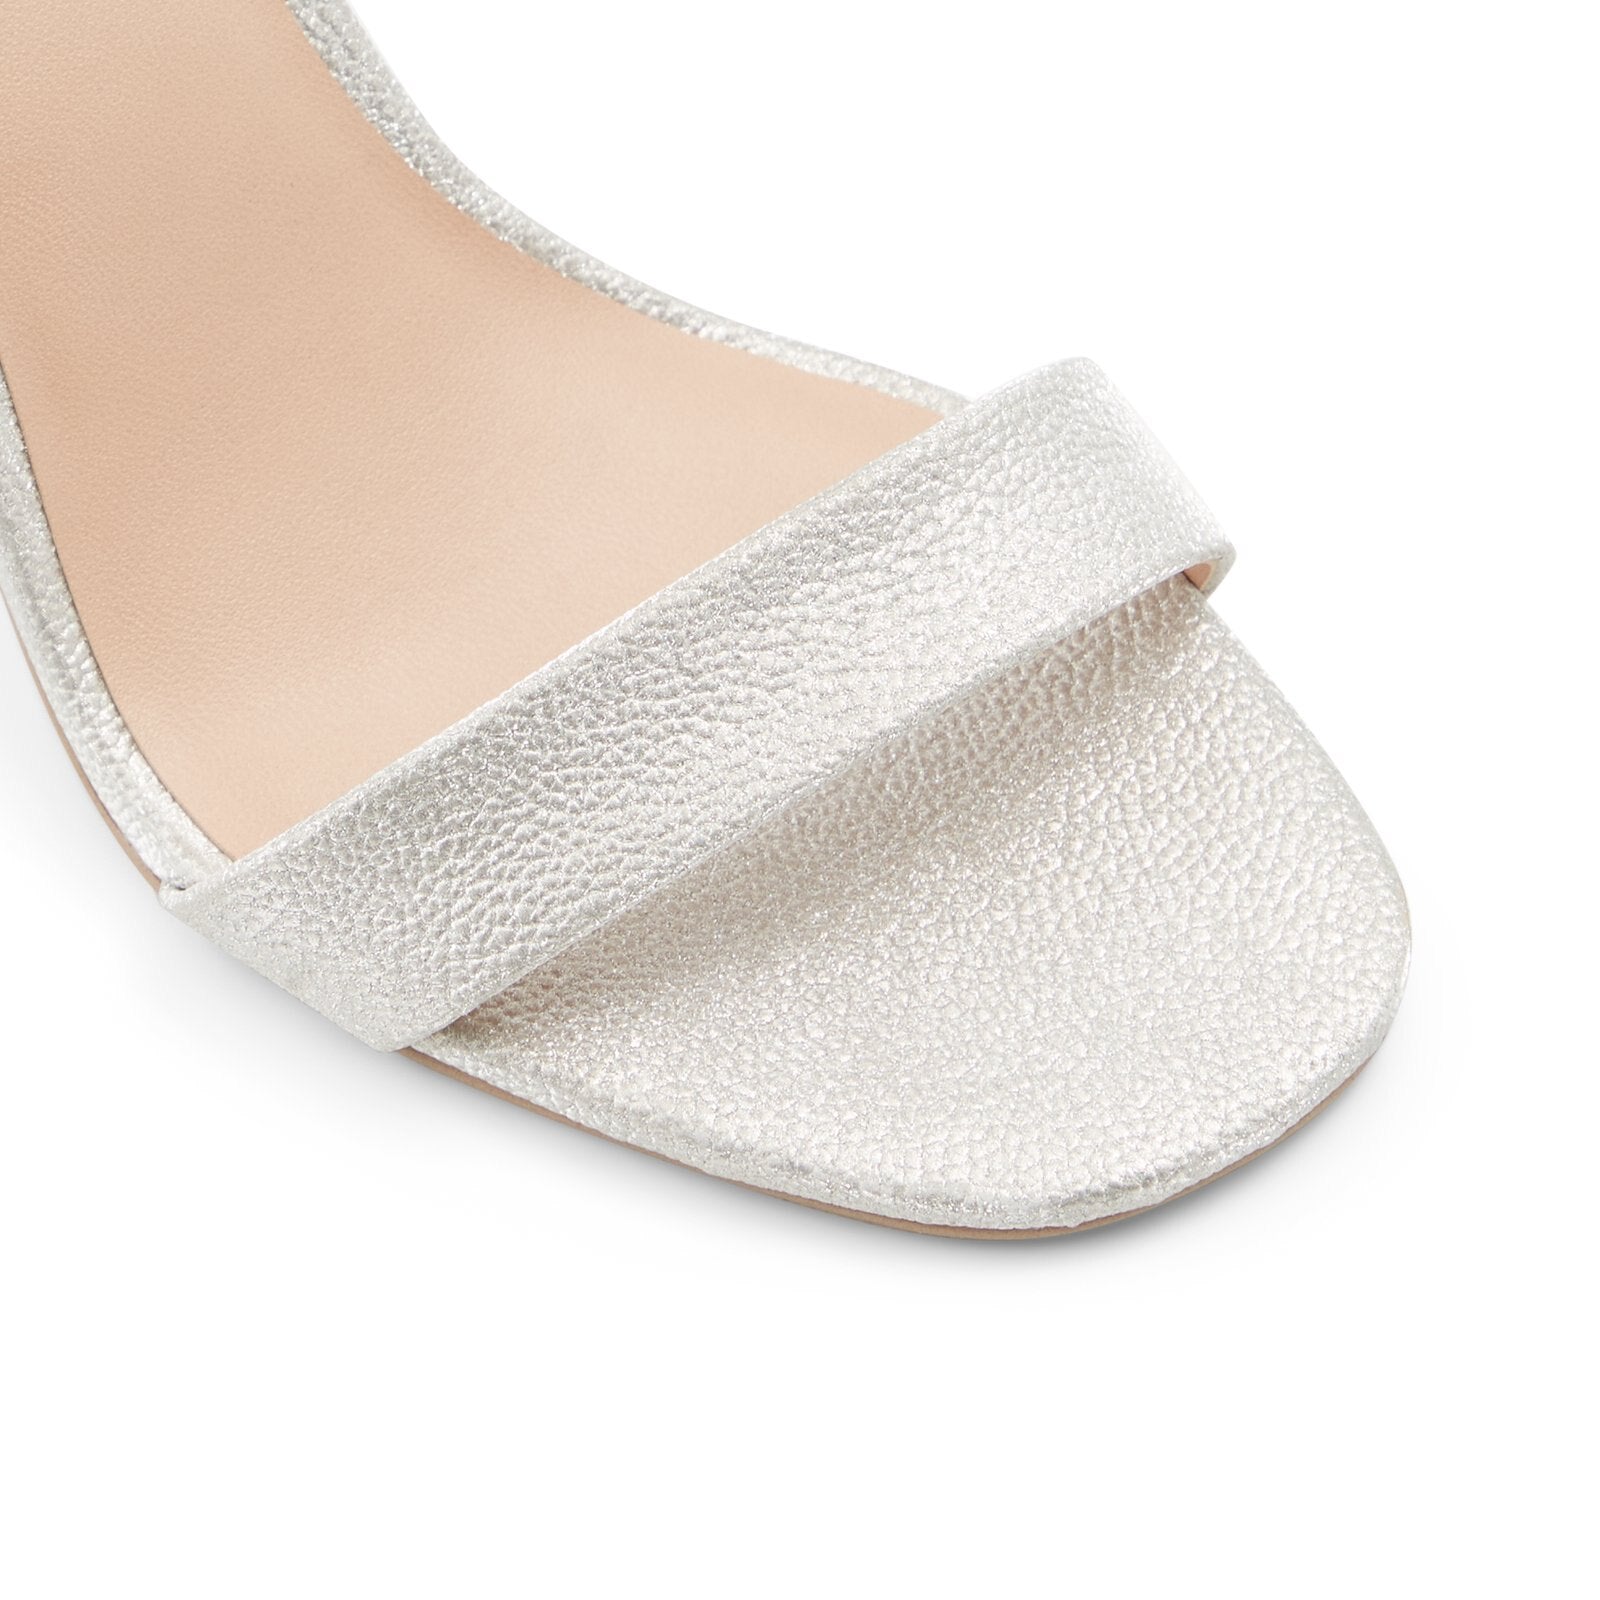 Ella / Heeled Sandals Women Shoes - SILVER - CALL IT SPRING KSA